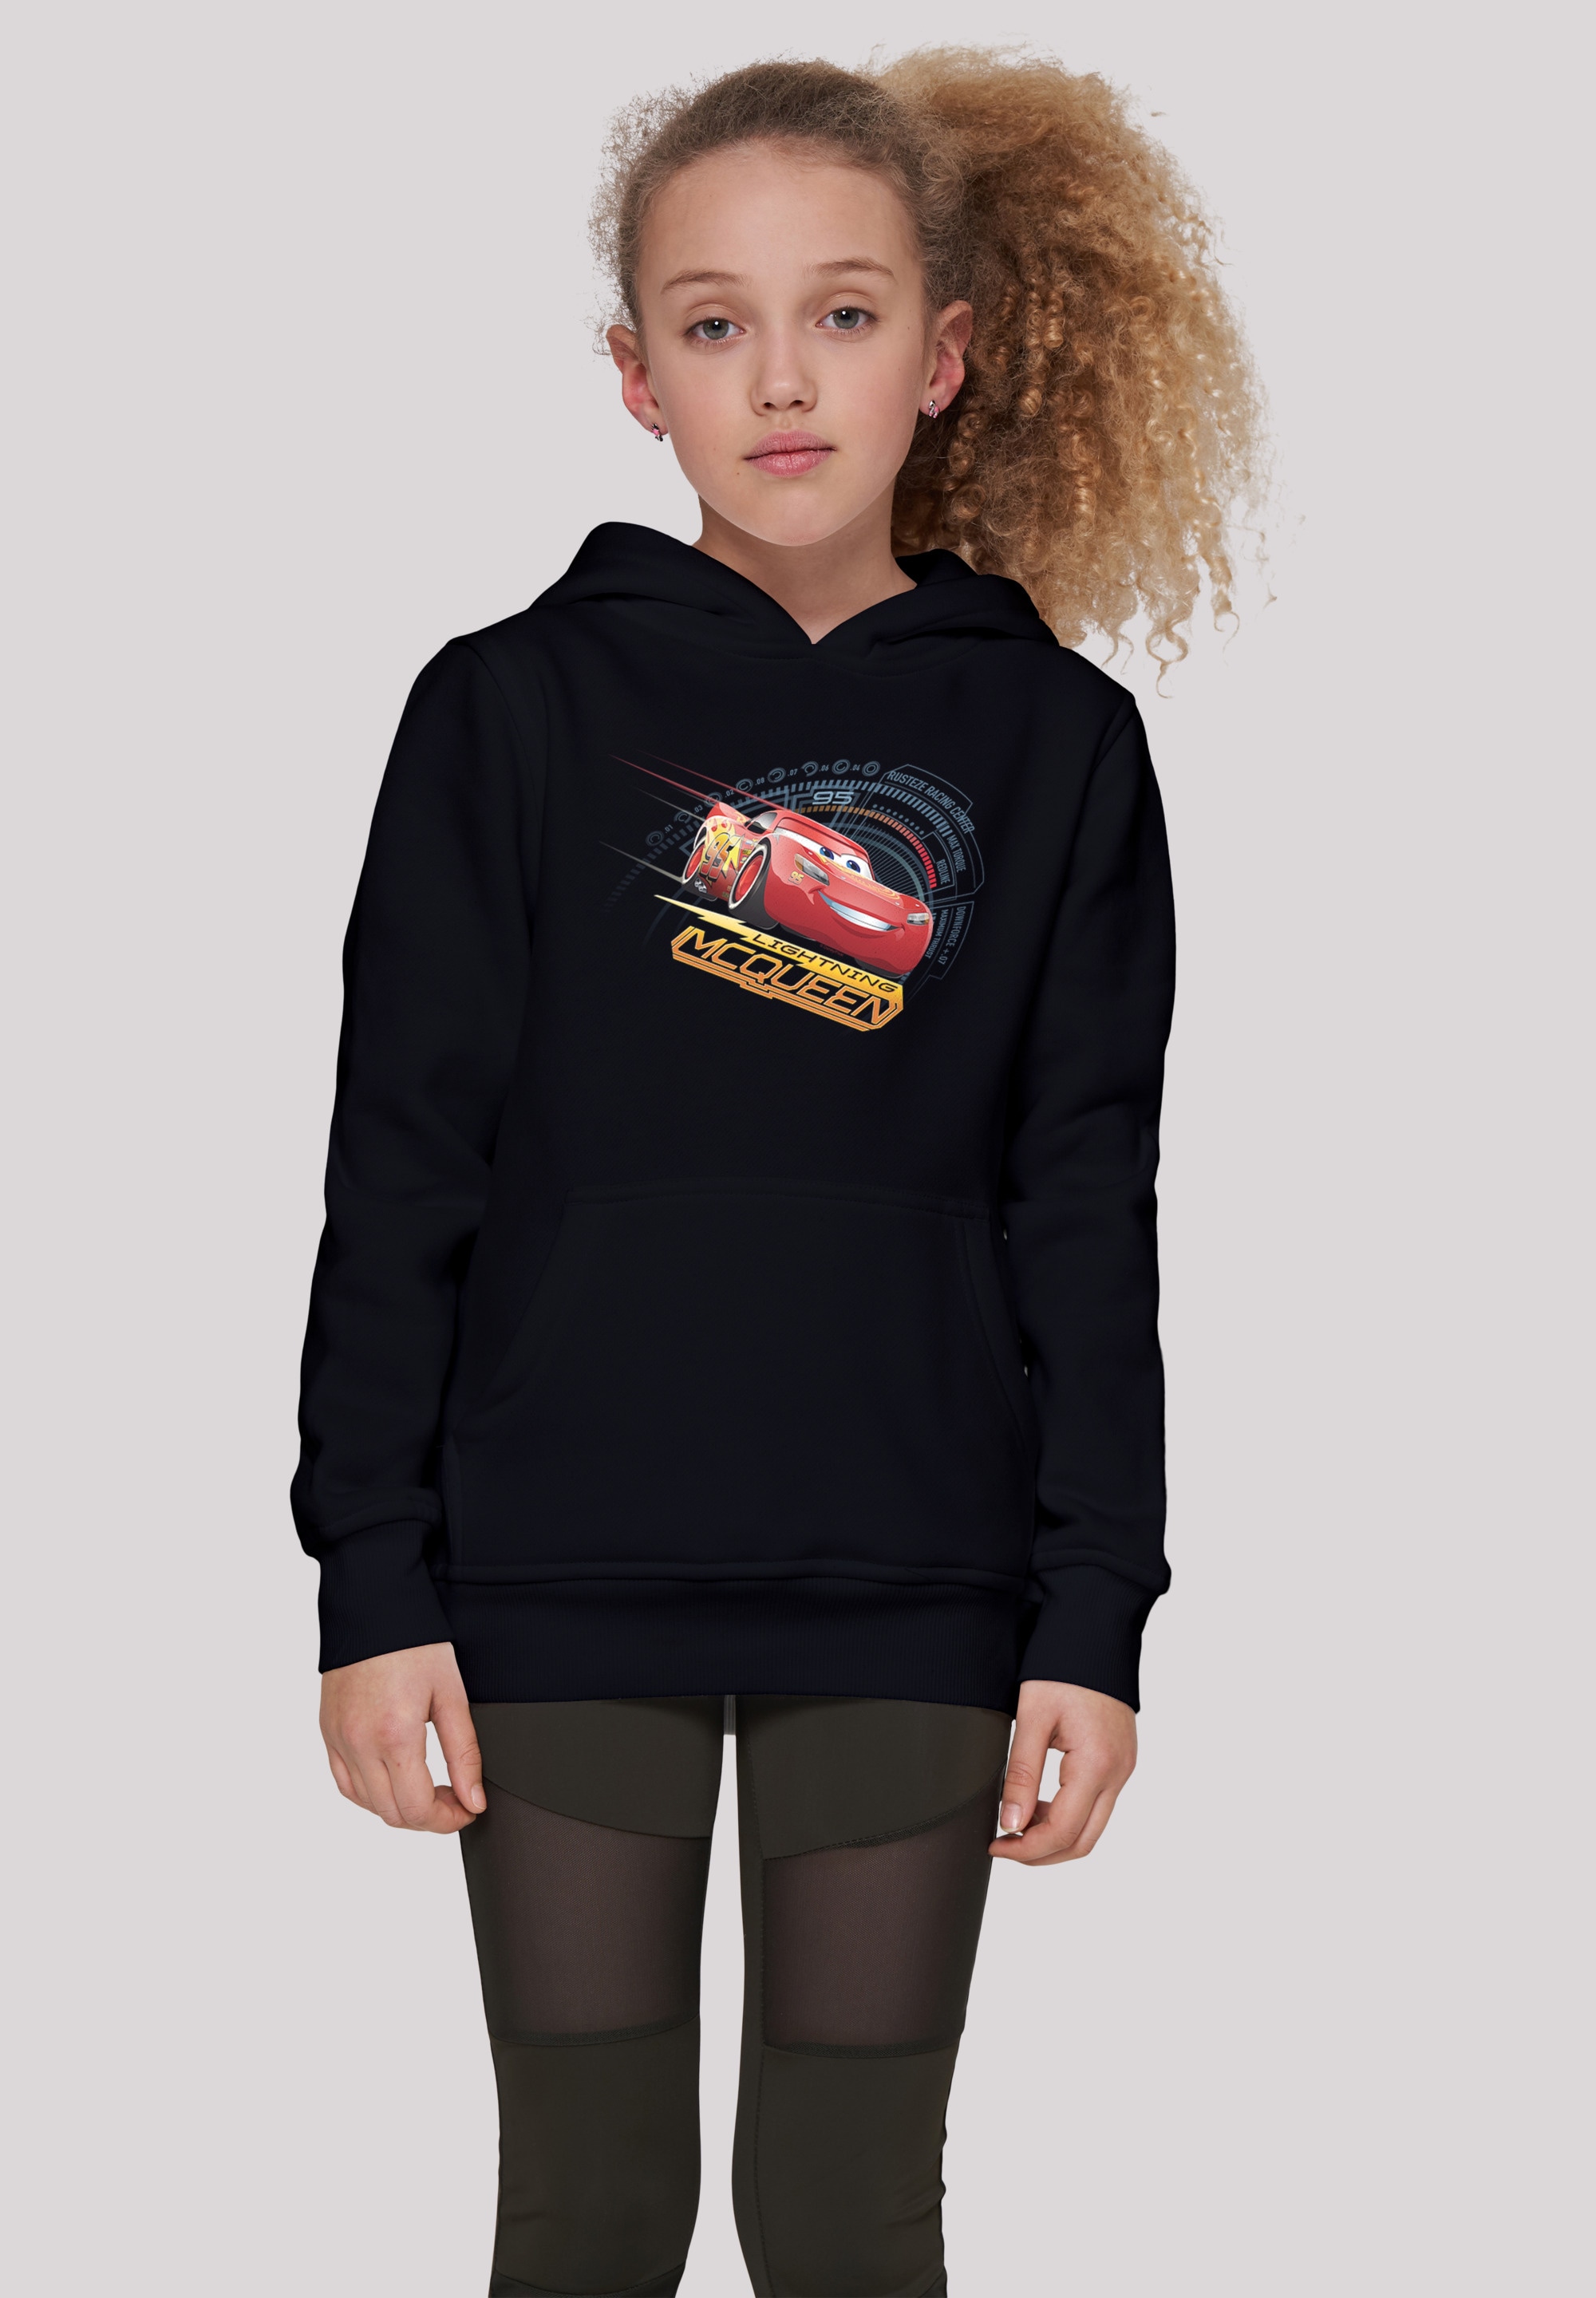 bestellen Sweatshirt Merch,Jungen,Mädchen,Bedruckt McQueen«, Kinder,Premium »Disney Unisex Lightning BAUR F4NT4STIC Cars |